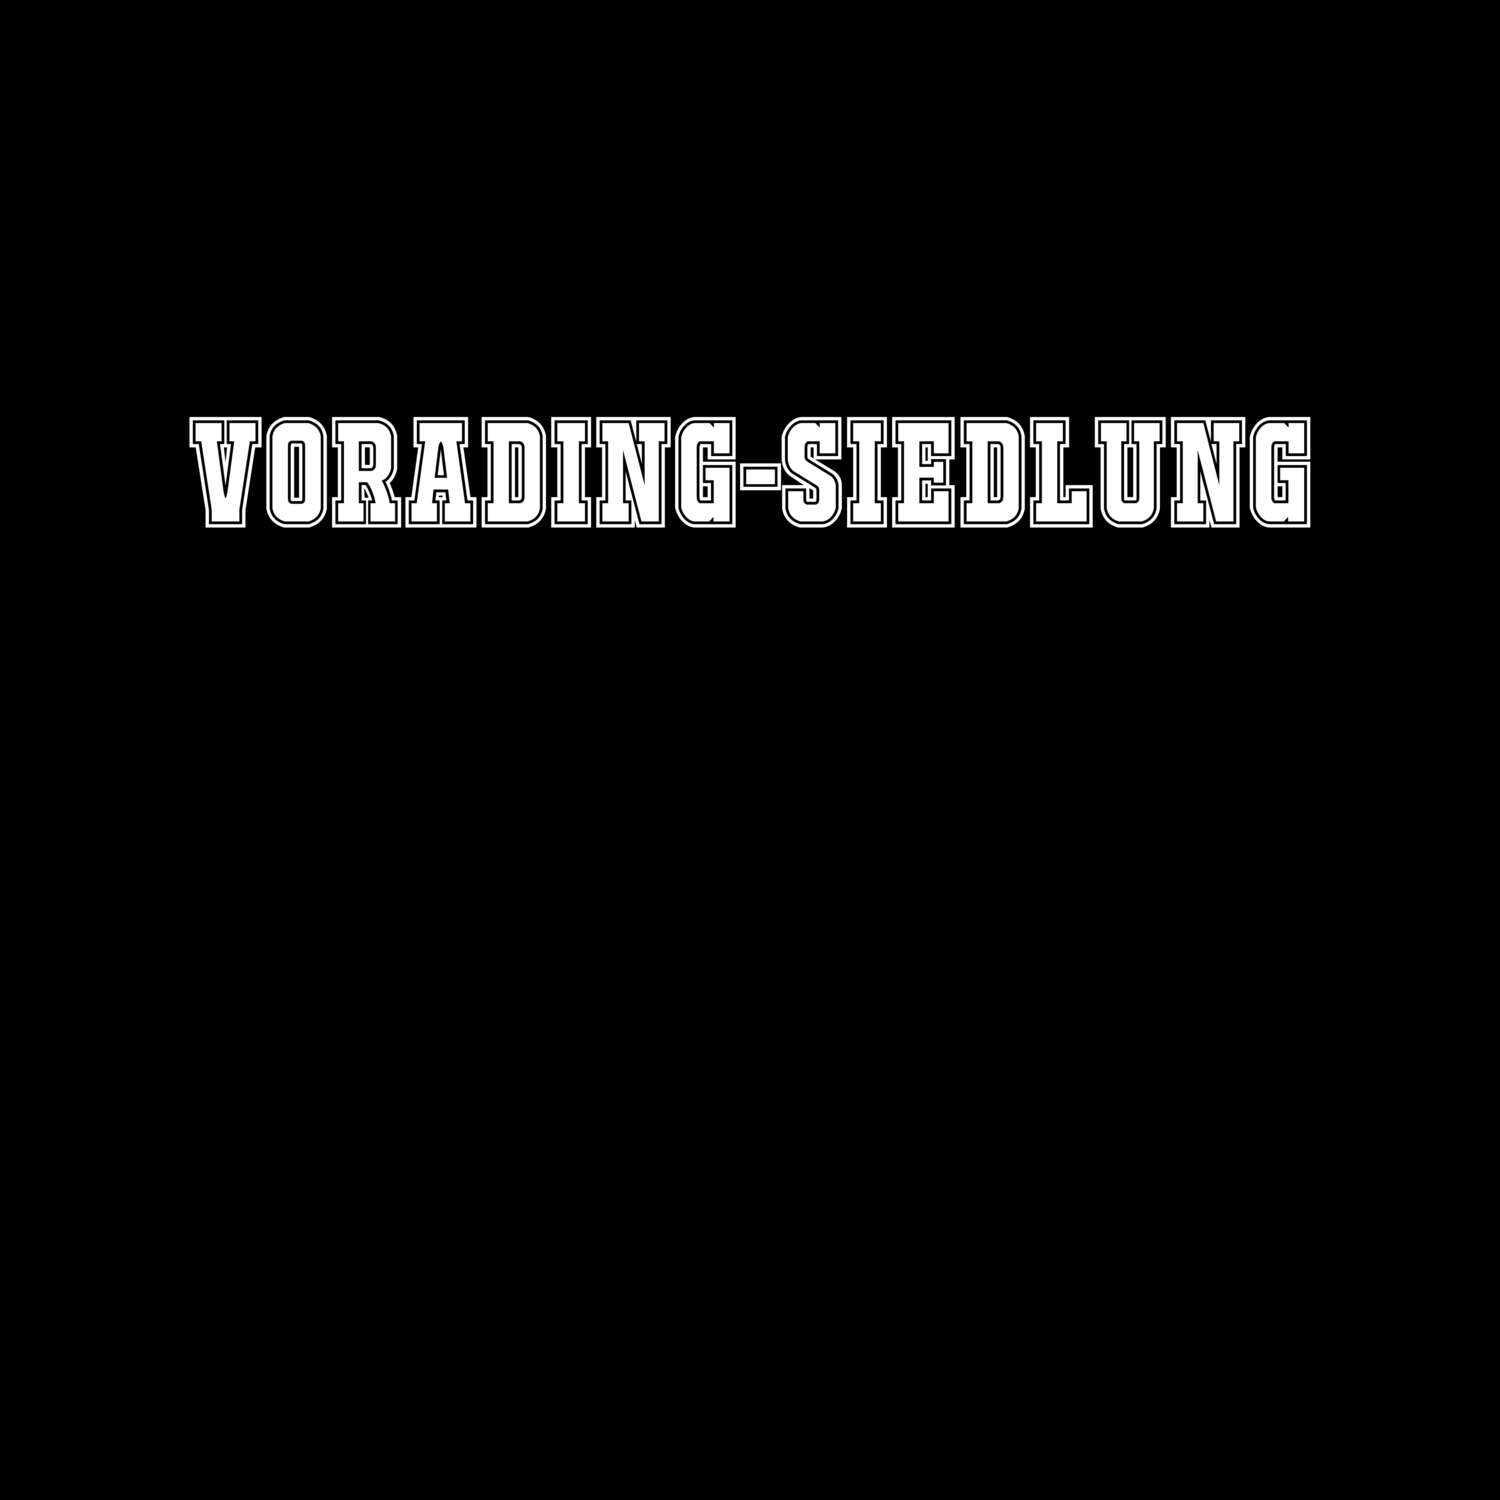 Vorading-Siedlung T-Shirt »Classic«